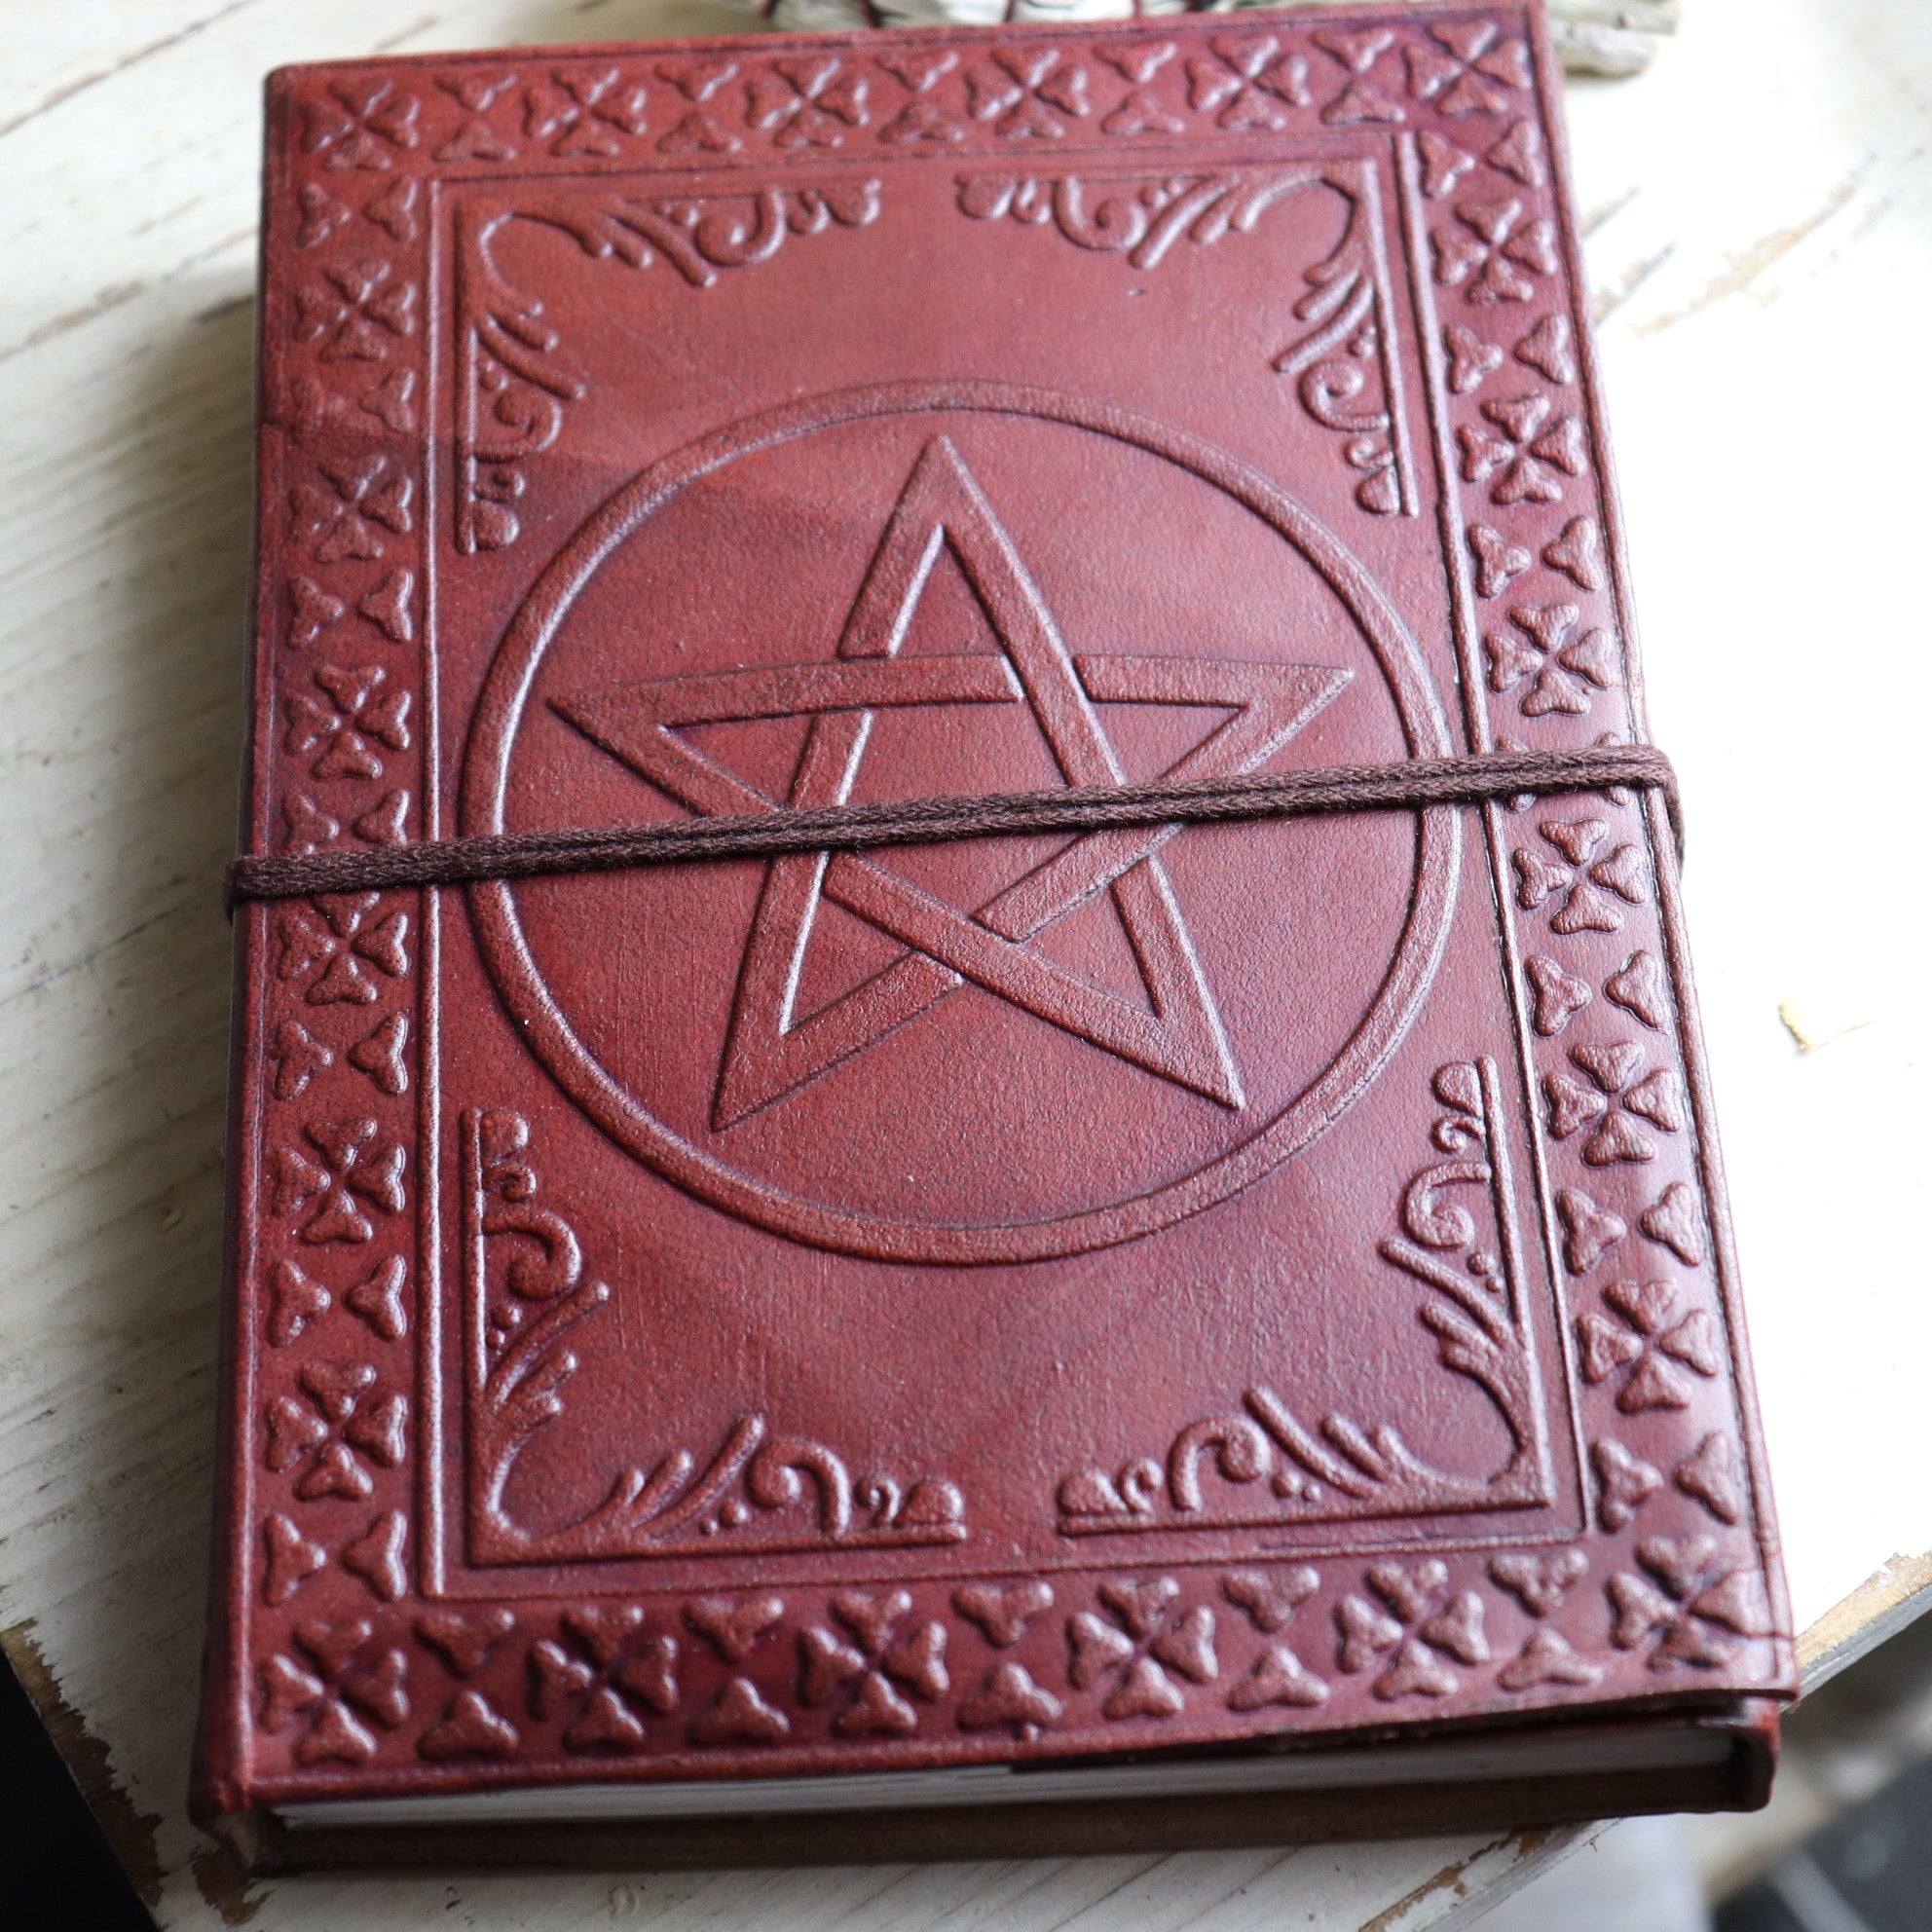 Wicca Journal Pentagram spell book 5"*7" - The Spirit of Life